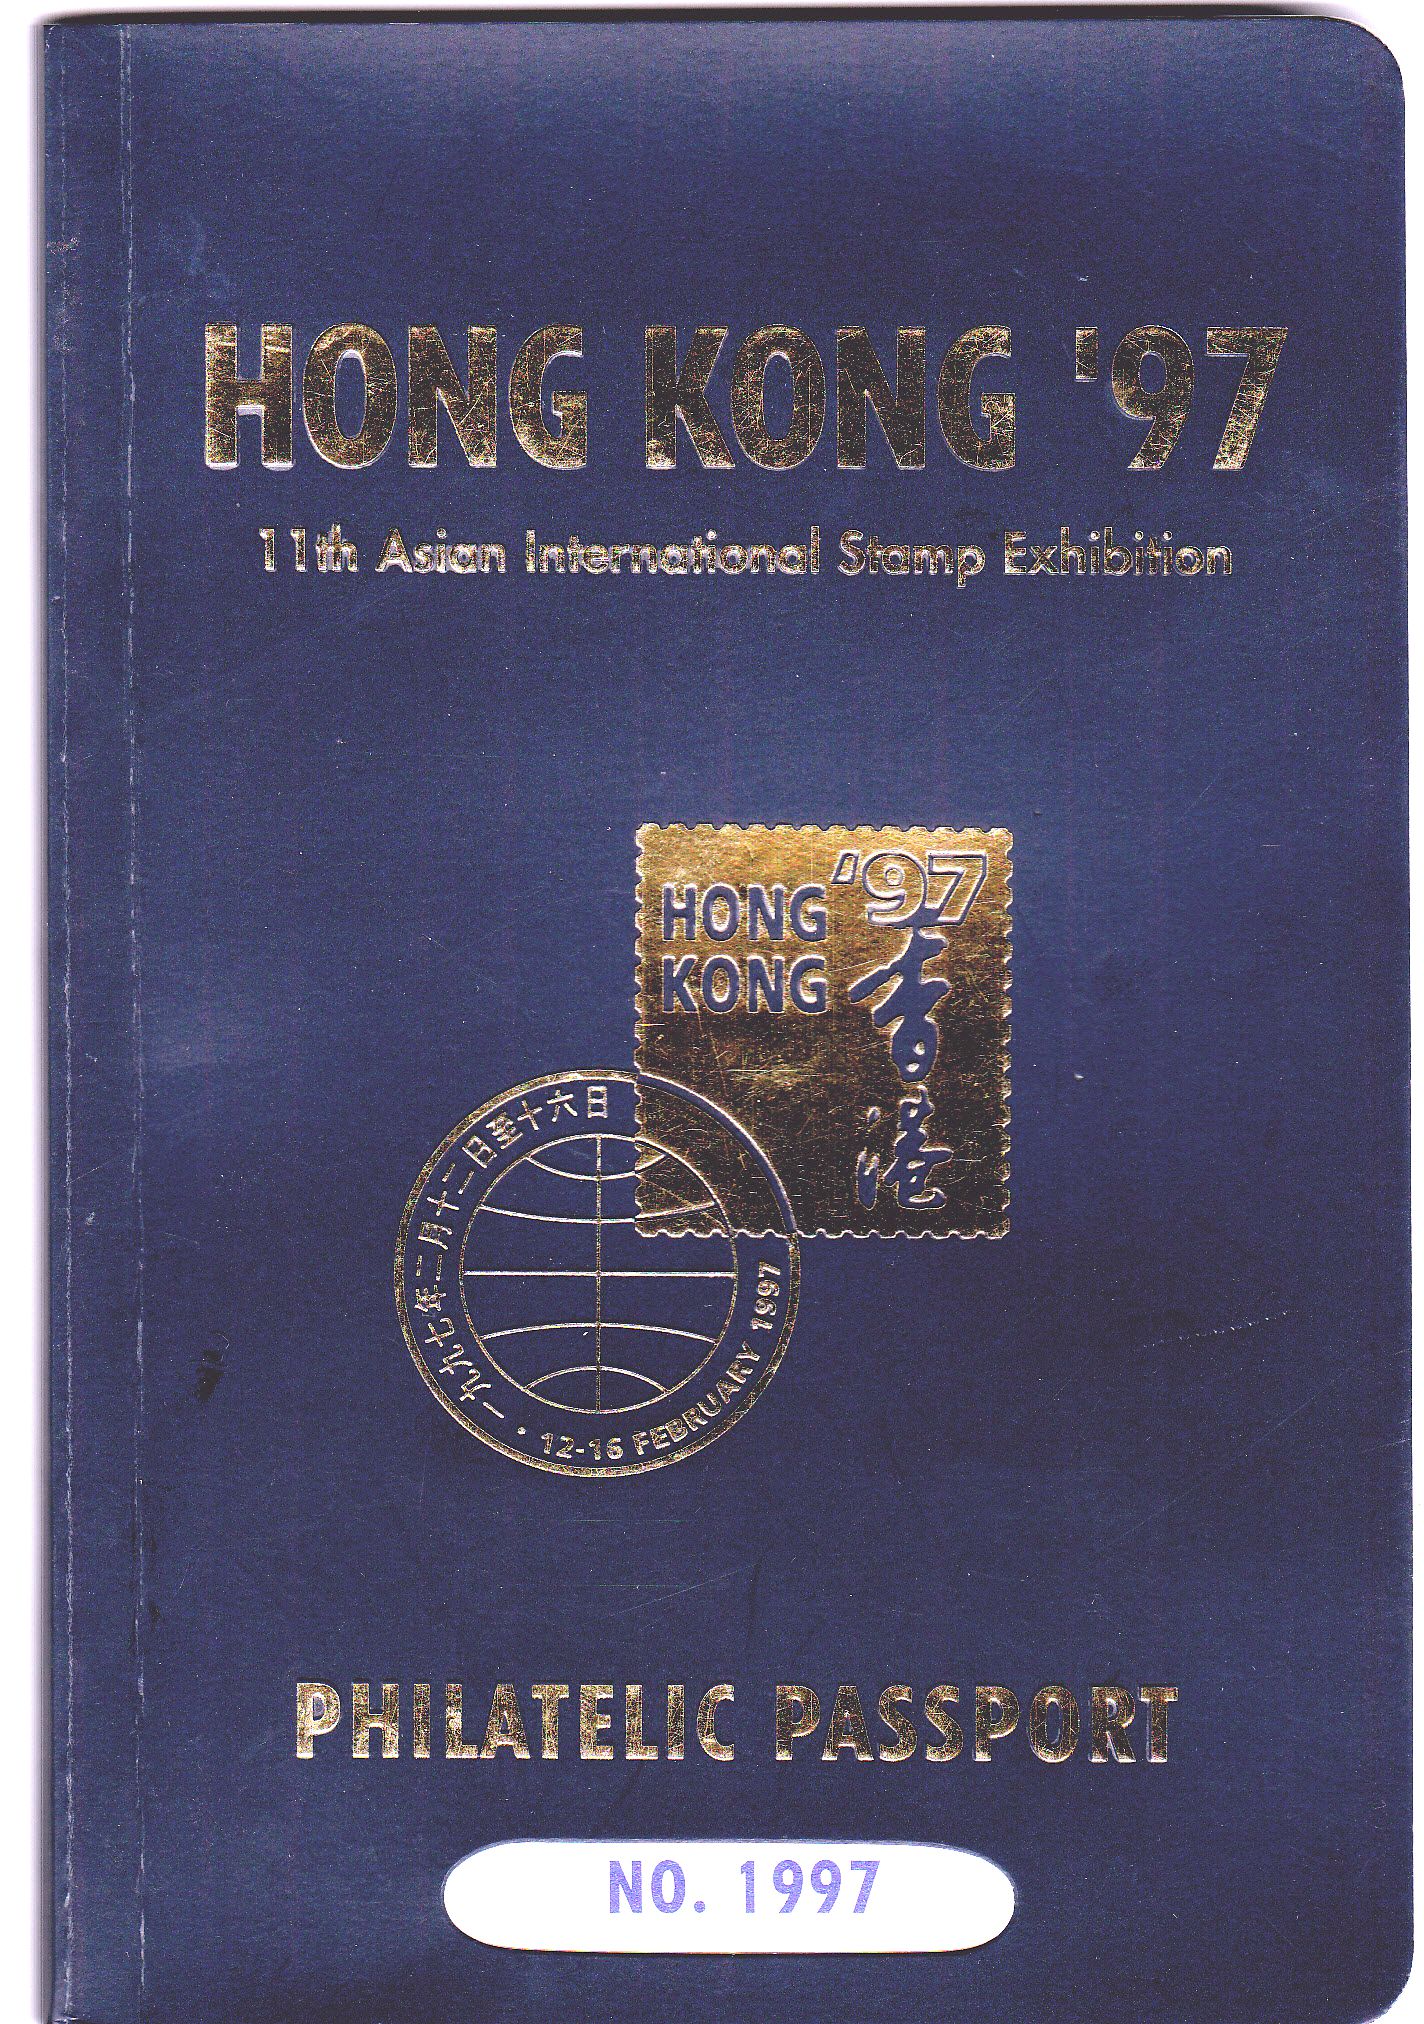 M9007, Hong Kong 97 -- 11th Asian International Philatelic Passport